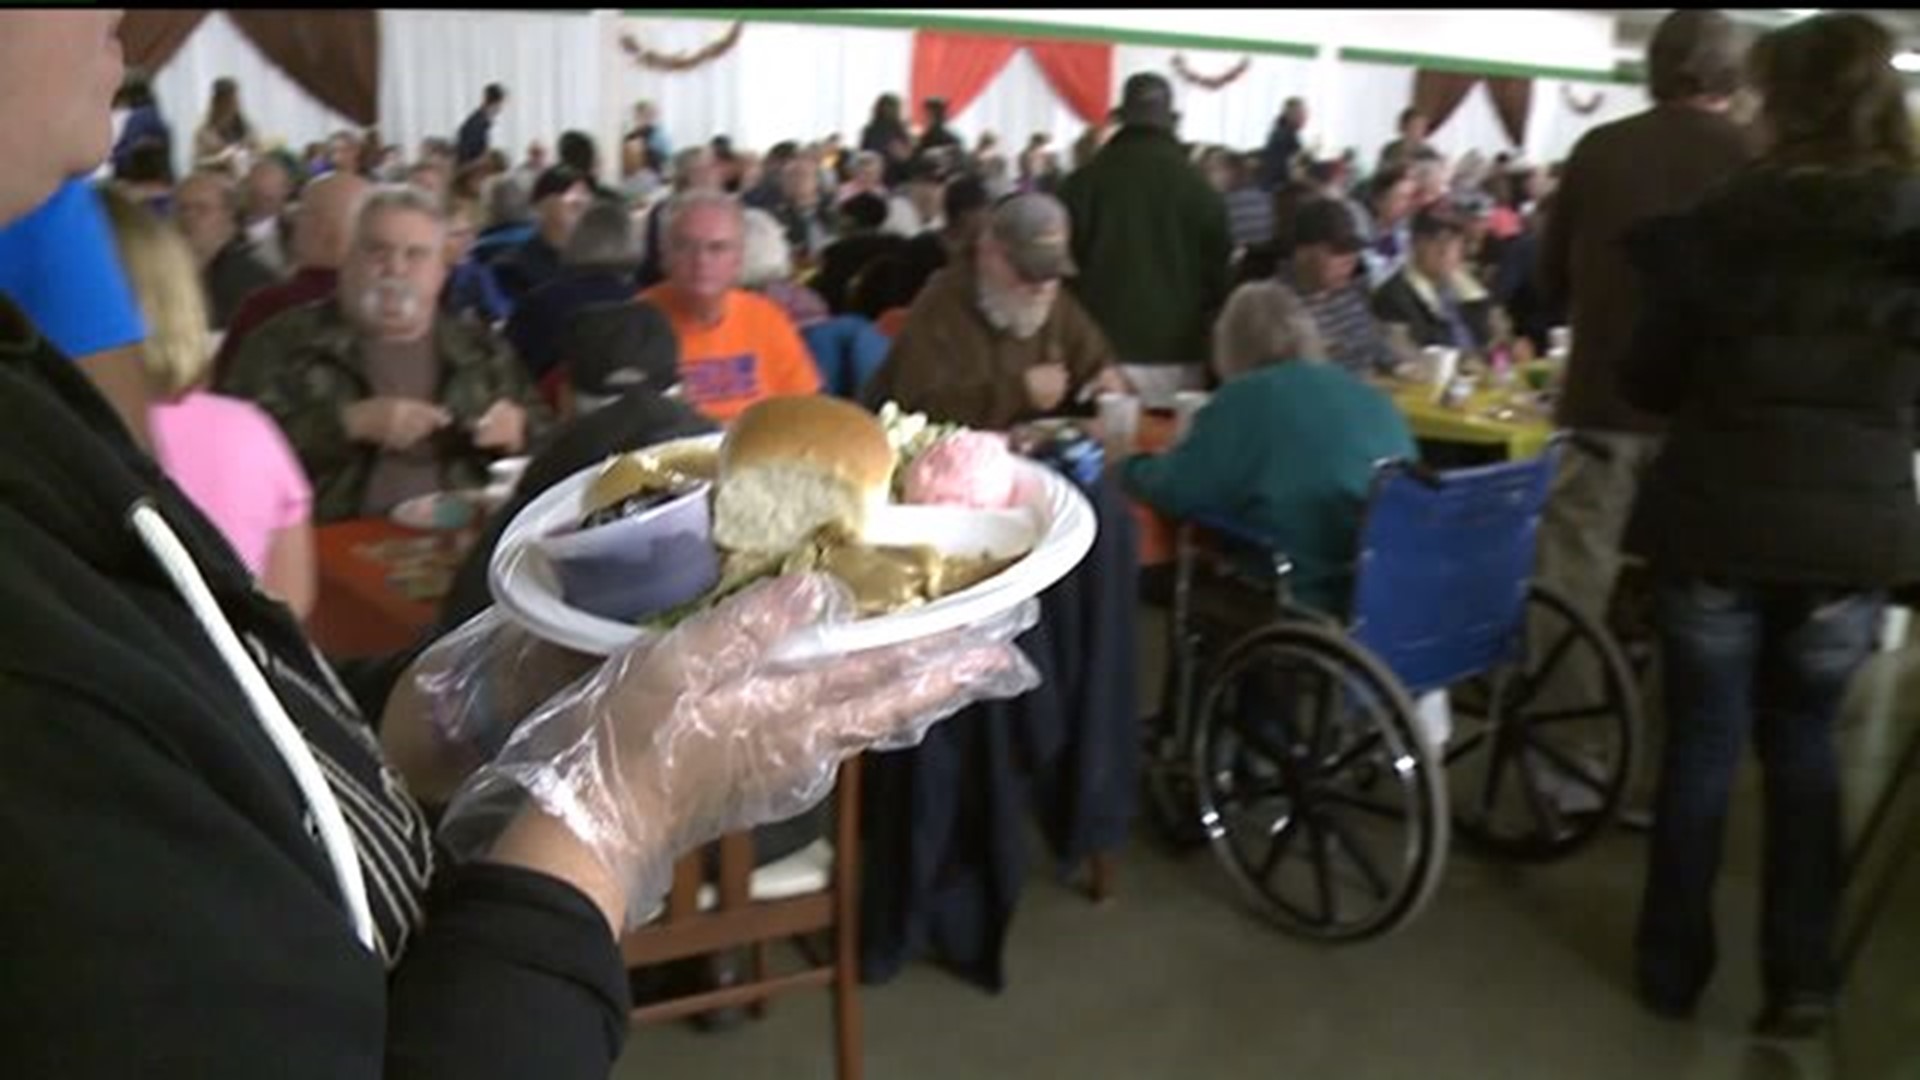 46th Annual Community Thanksgiving Dinner